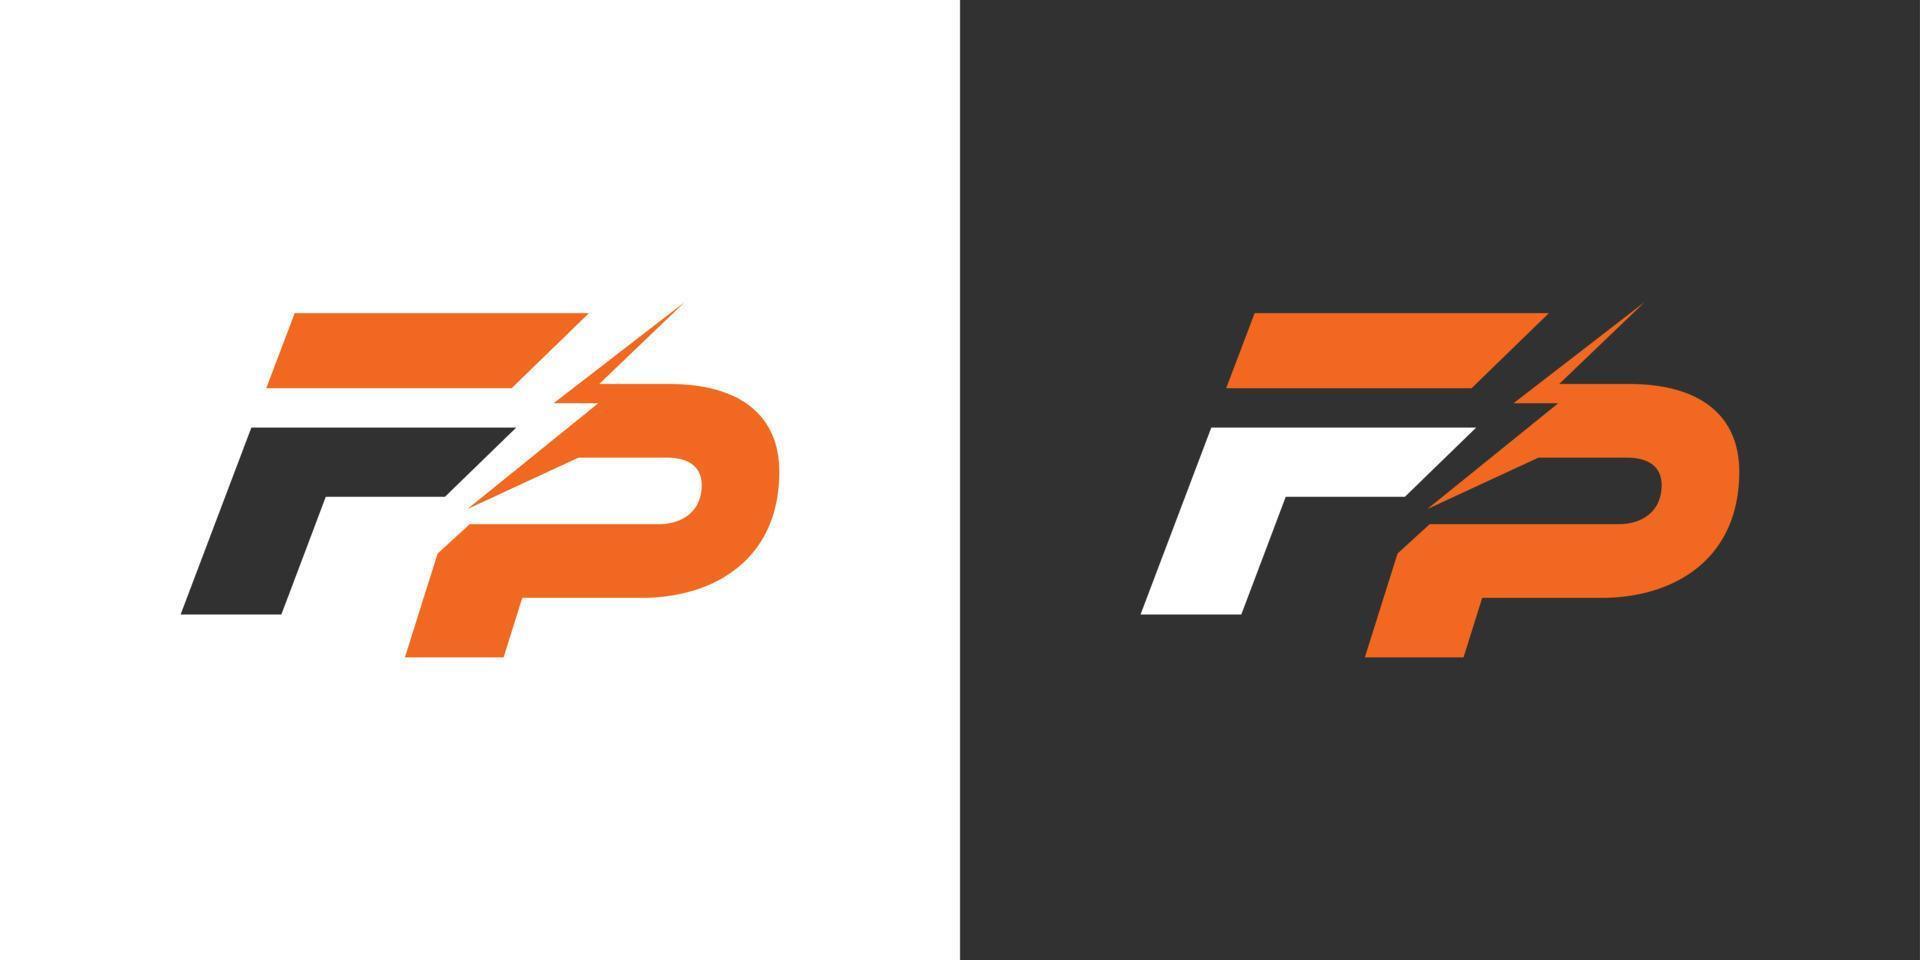 Initial FP Letter logo with lightning bolt logo vector design.